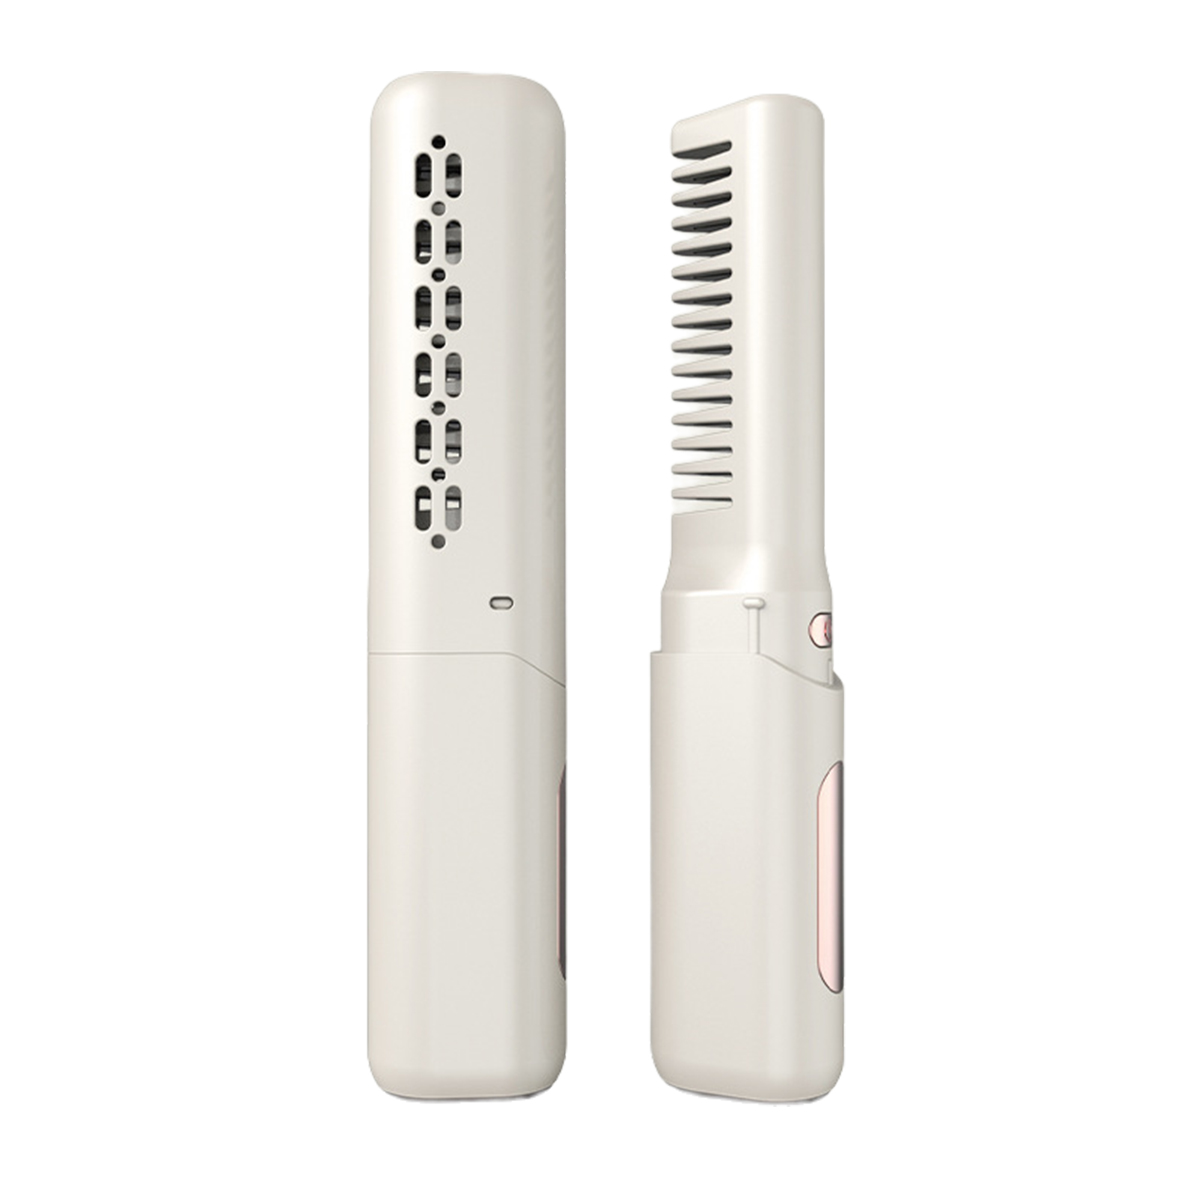 BRIGHTAKE Drahtloser LCD Mini Kamm Temperaturstufen: für Tragbarer Glätter 3 | Unterwegs Haarglättungskamm, Haarglätter